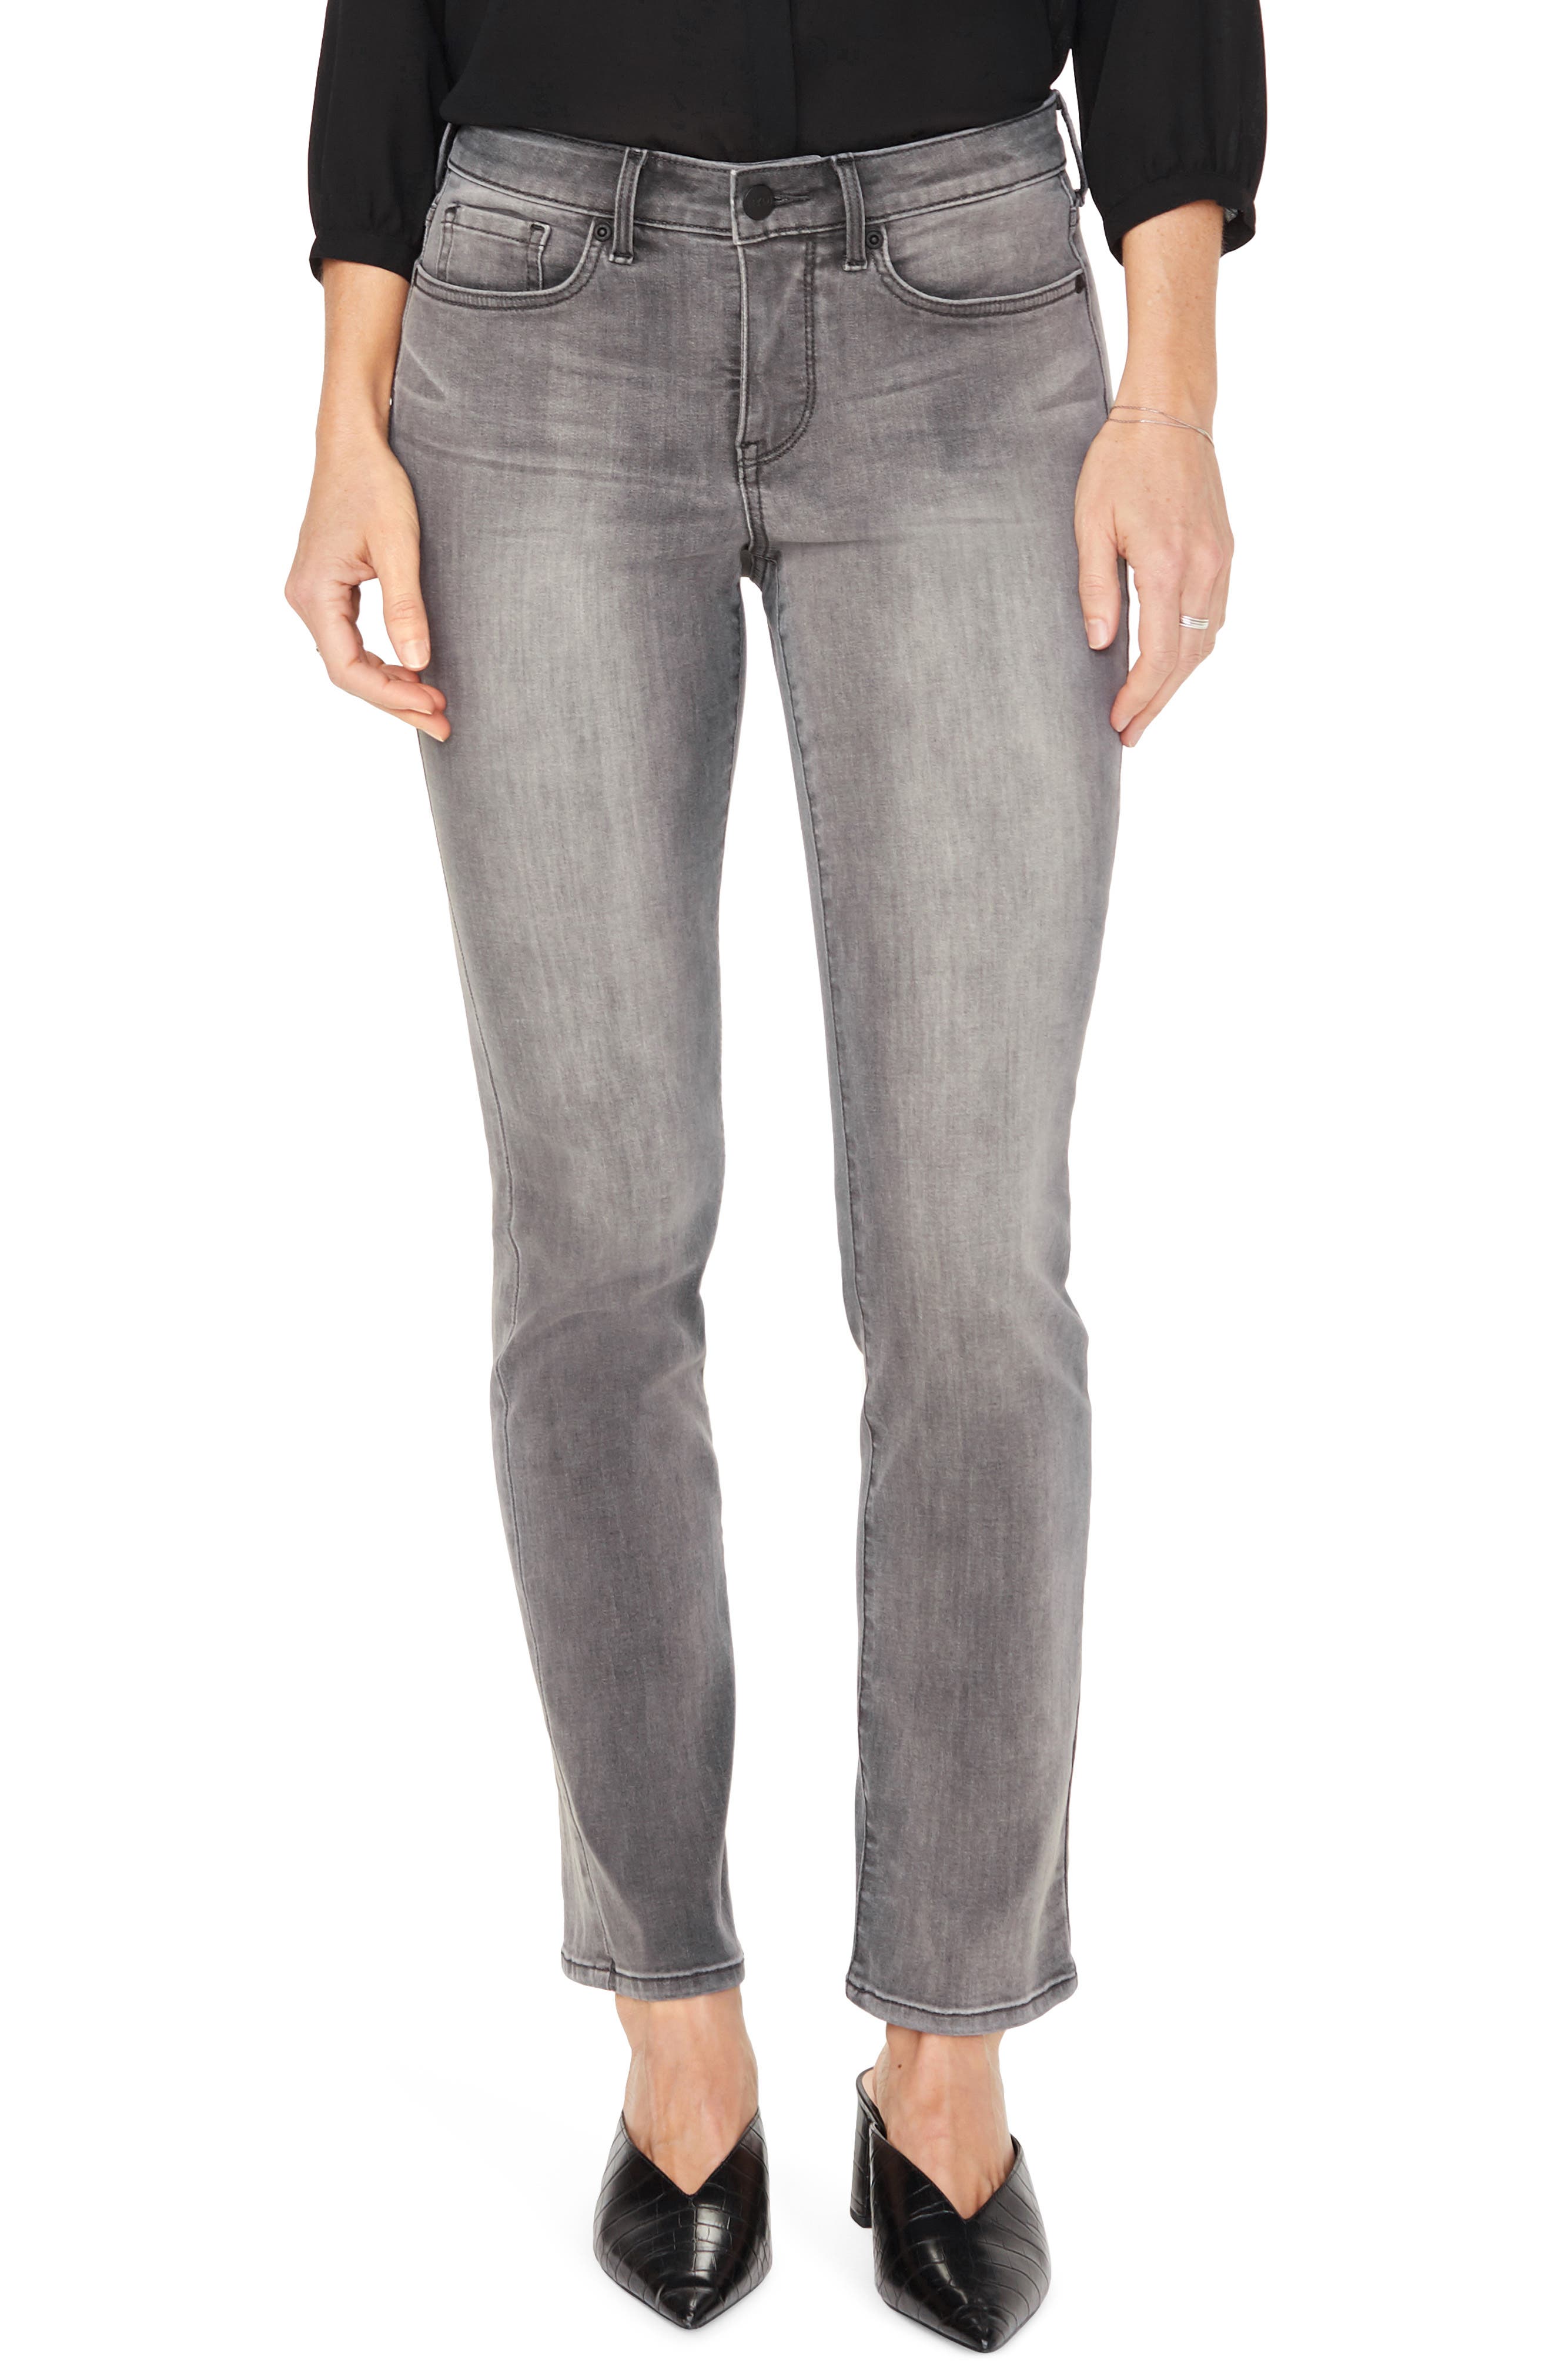 nydj grey jeans